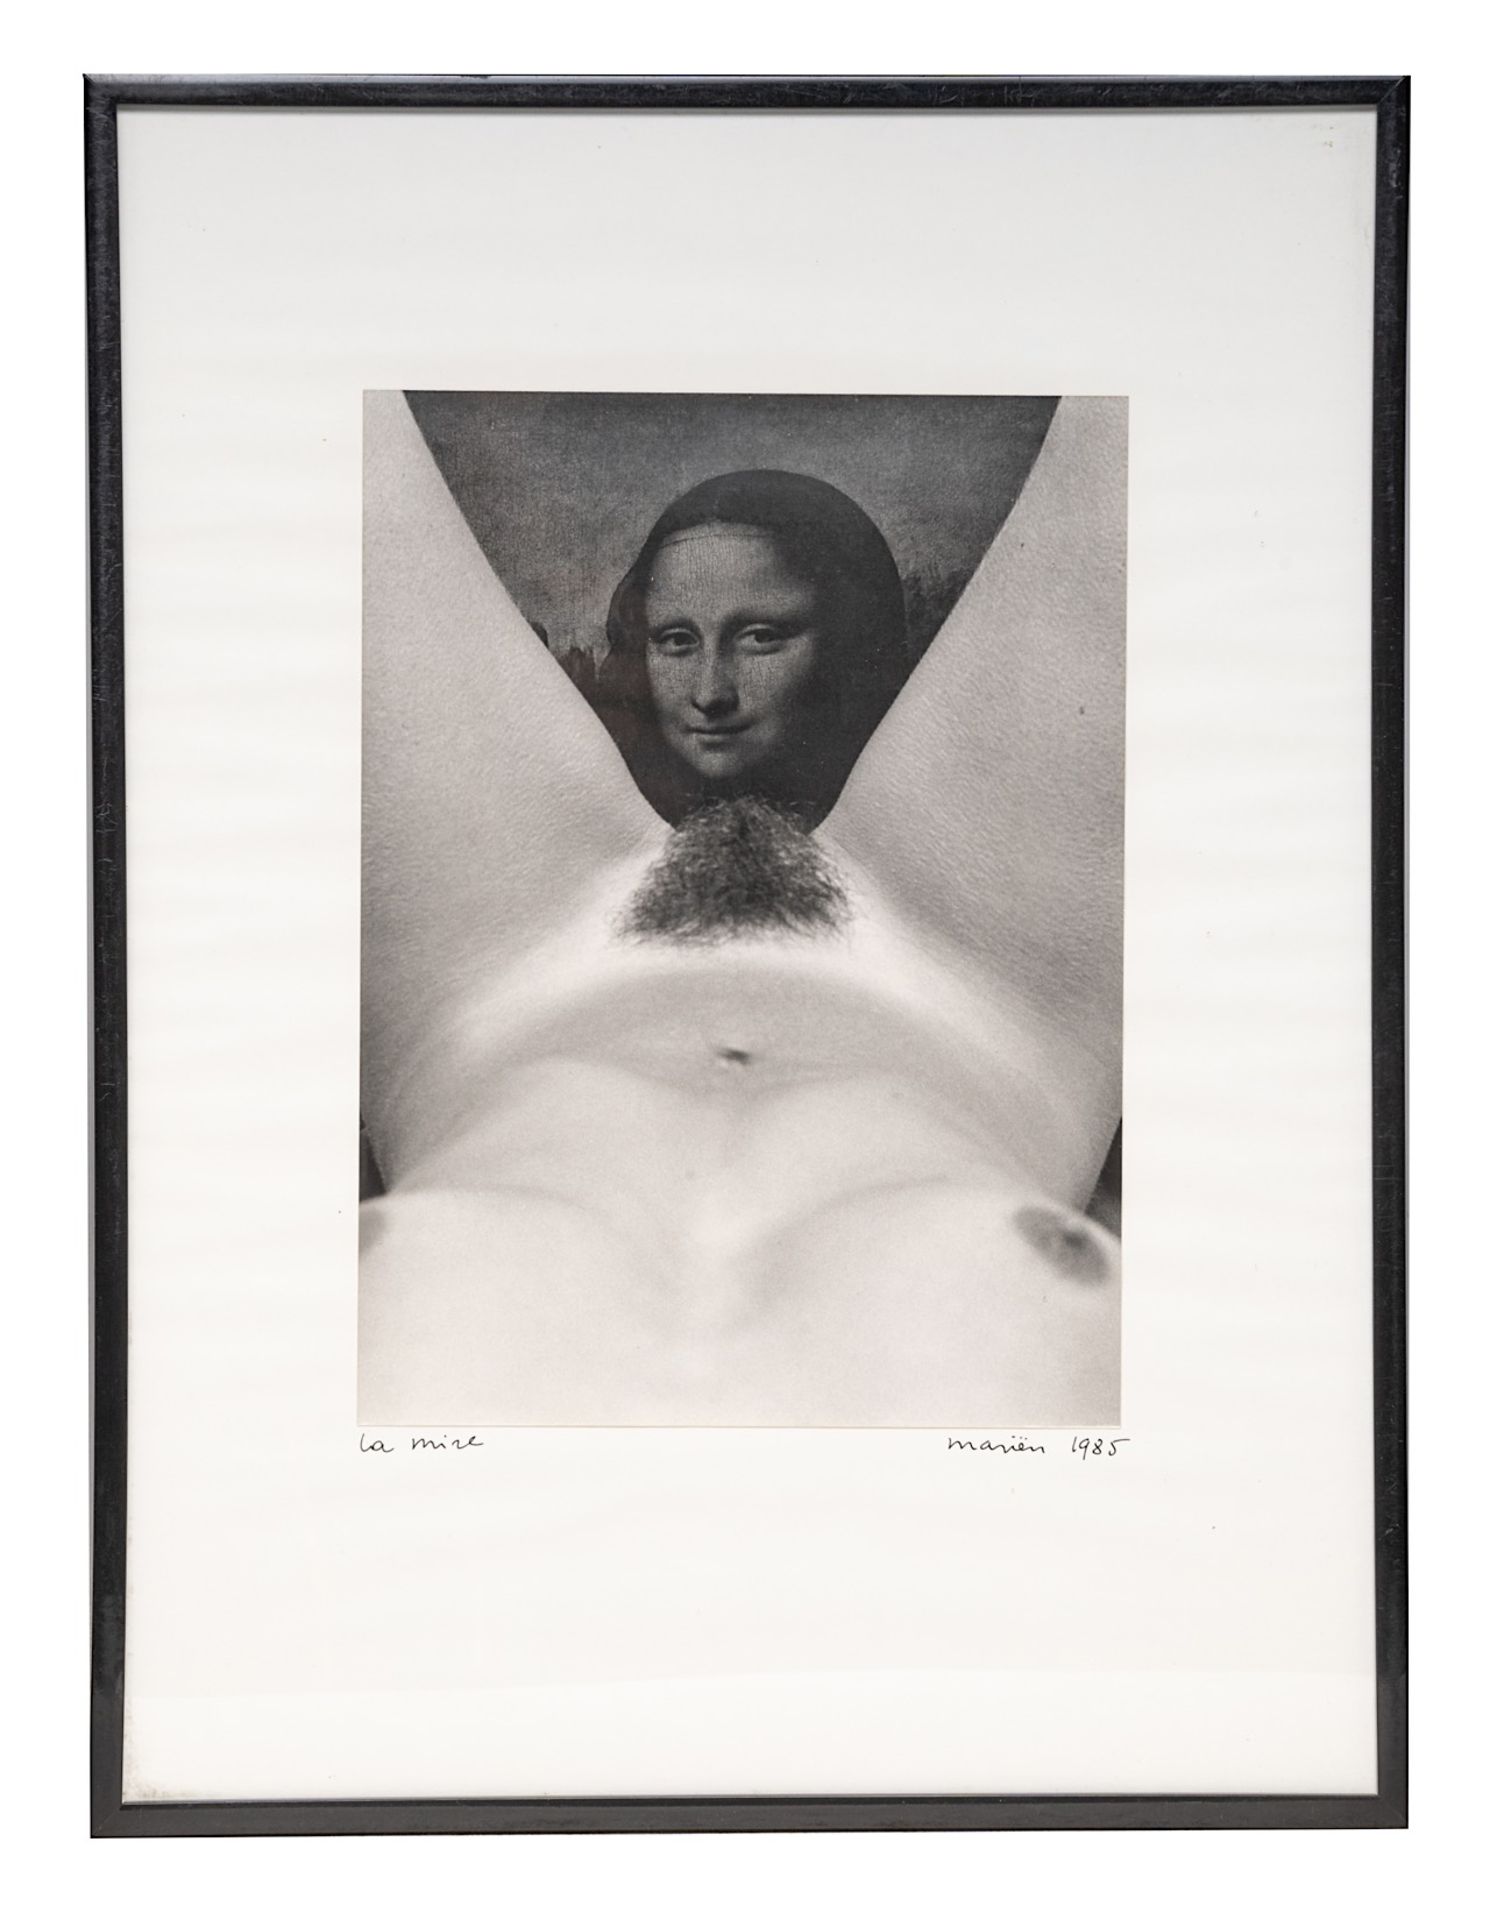 Marcel Marien (1920-1993), 'La Mire', 1985, gelatine silver print 24 x 18 cm. (9.4 x 7.0 in.), Frame - Image 2 of 4